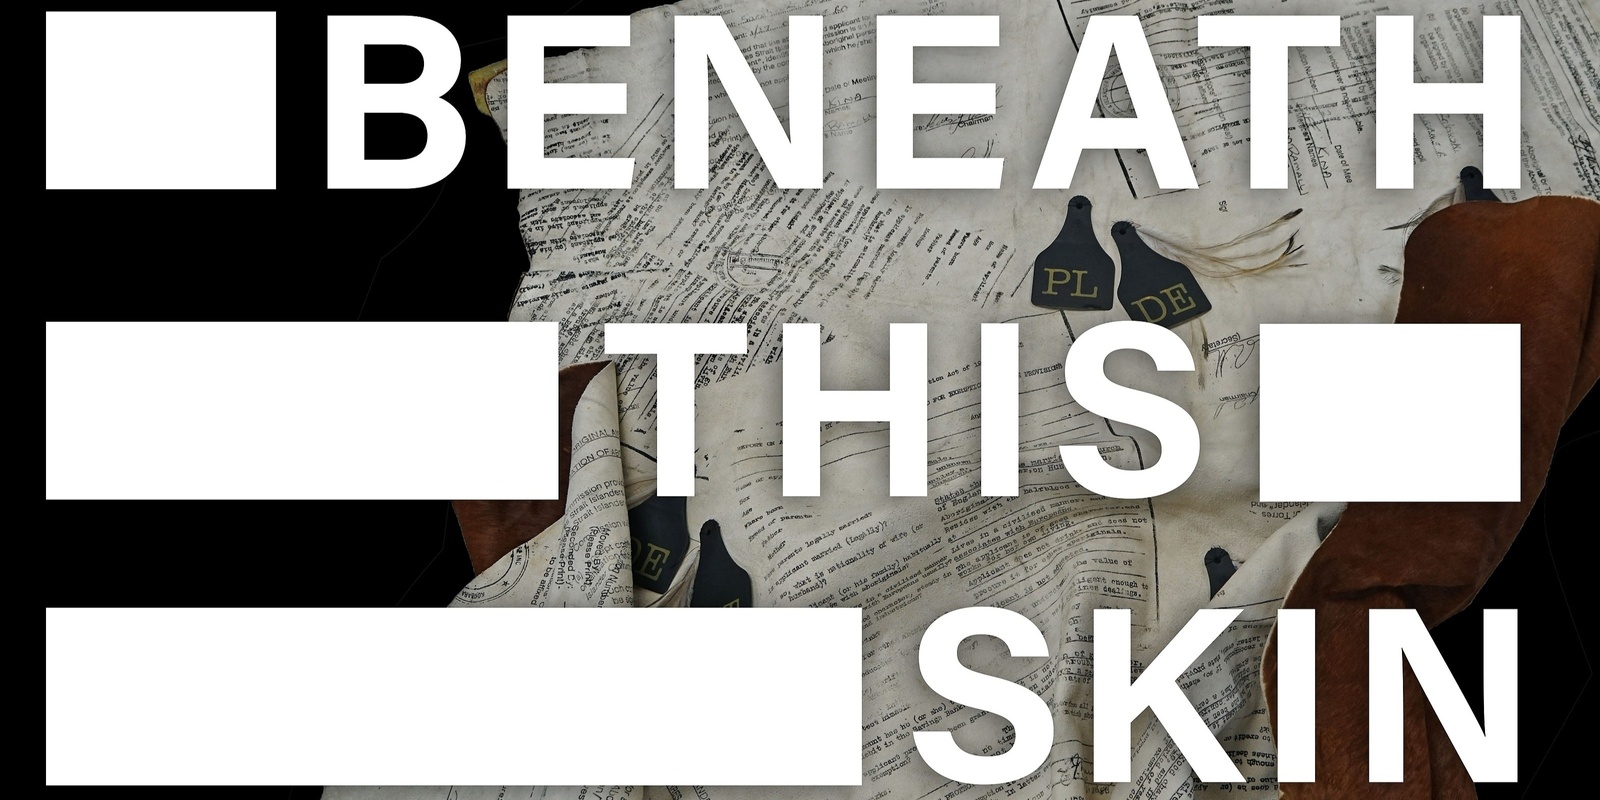 Banner image for Beneath this Skin – Artist Talk